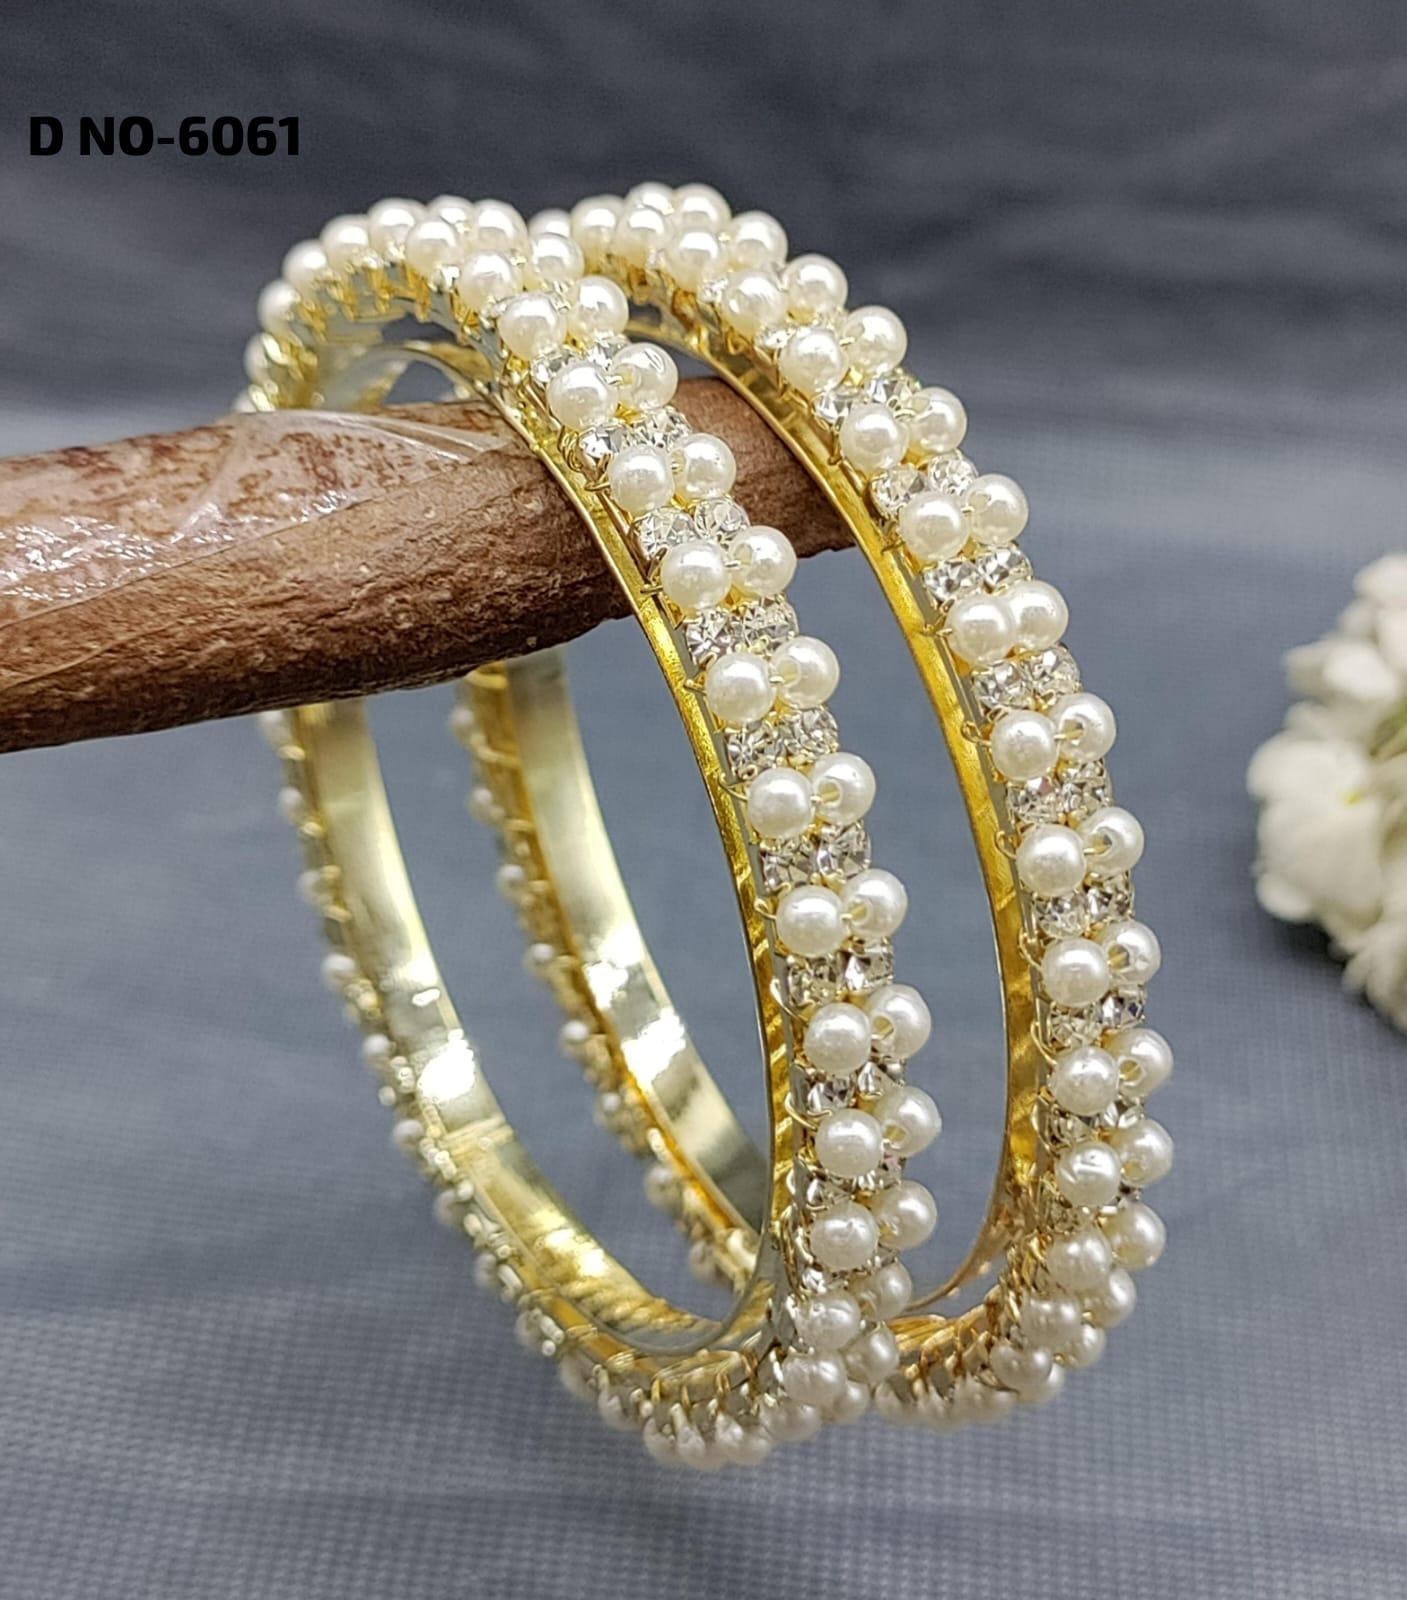 Stone Pearls jeco Bangles Golden White Sku-6061 - rchiecreation